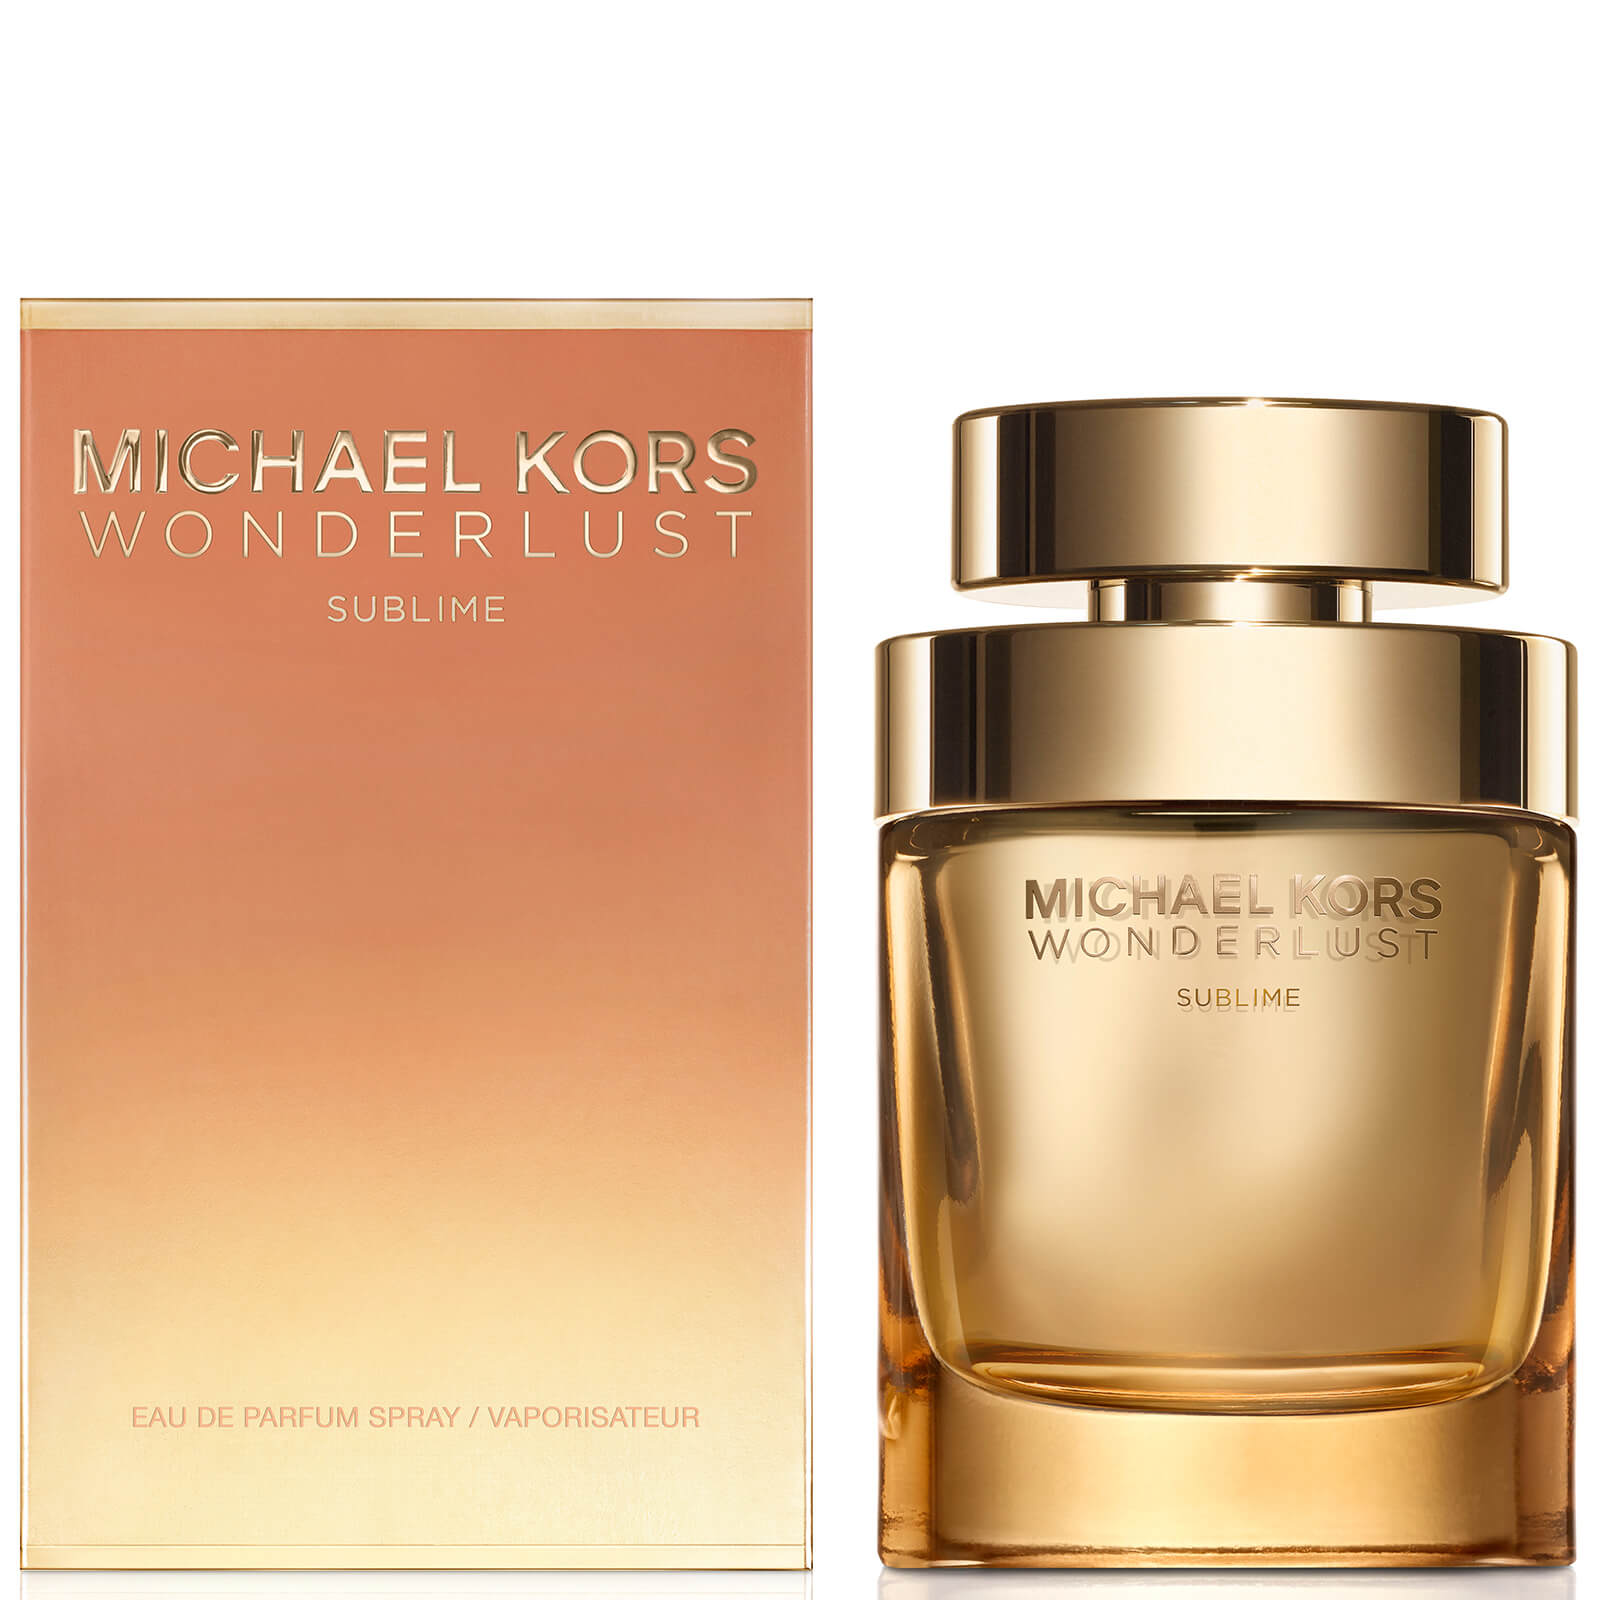 michael kors perfume wonderlust review